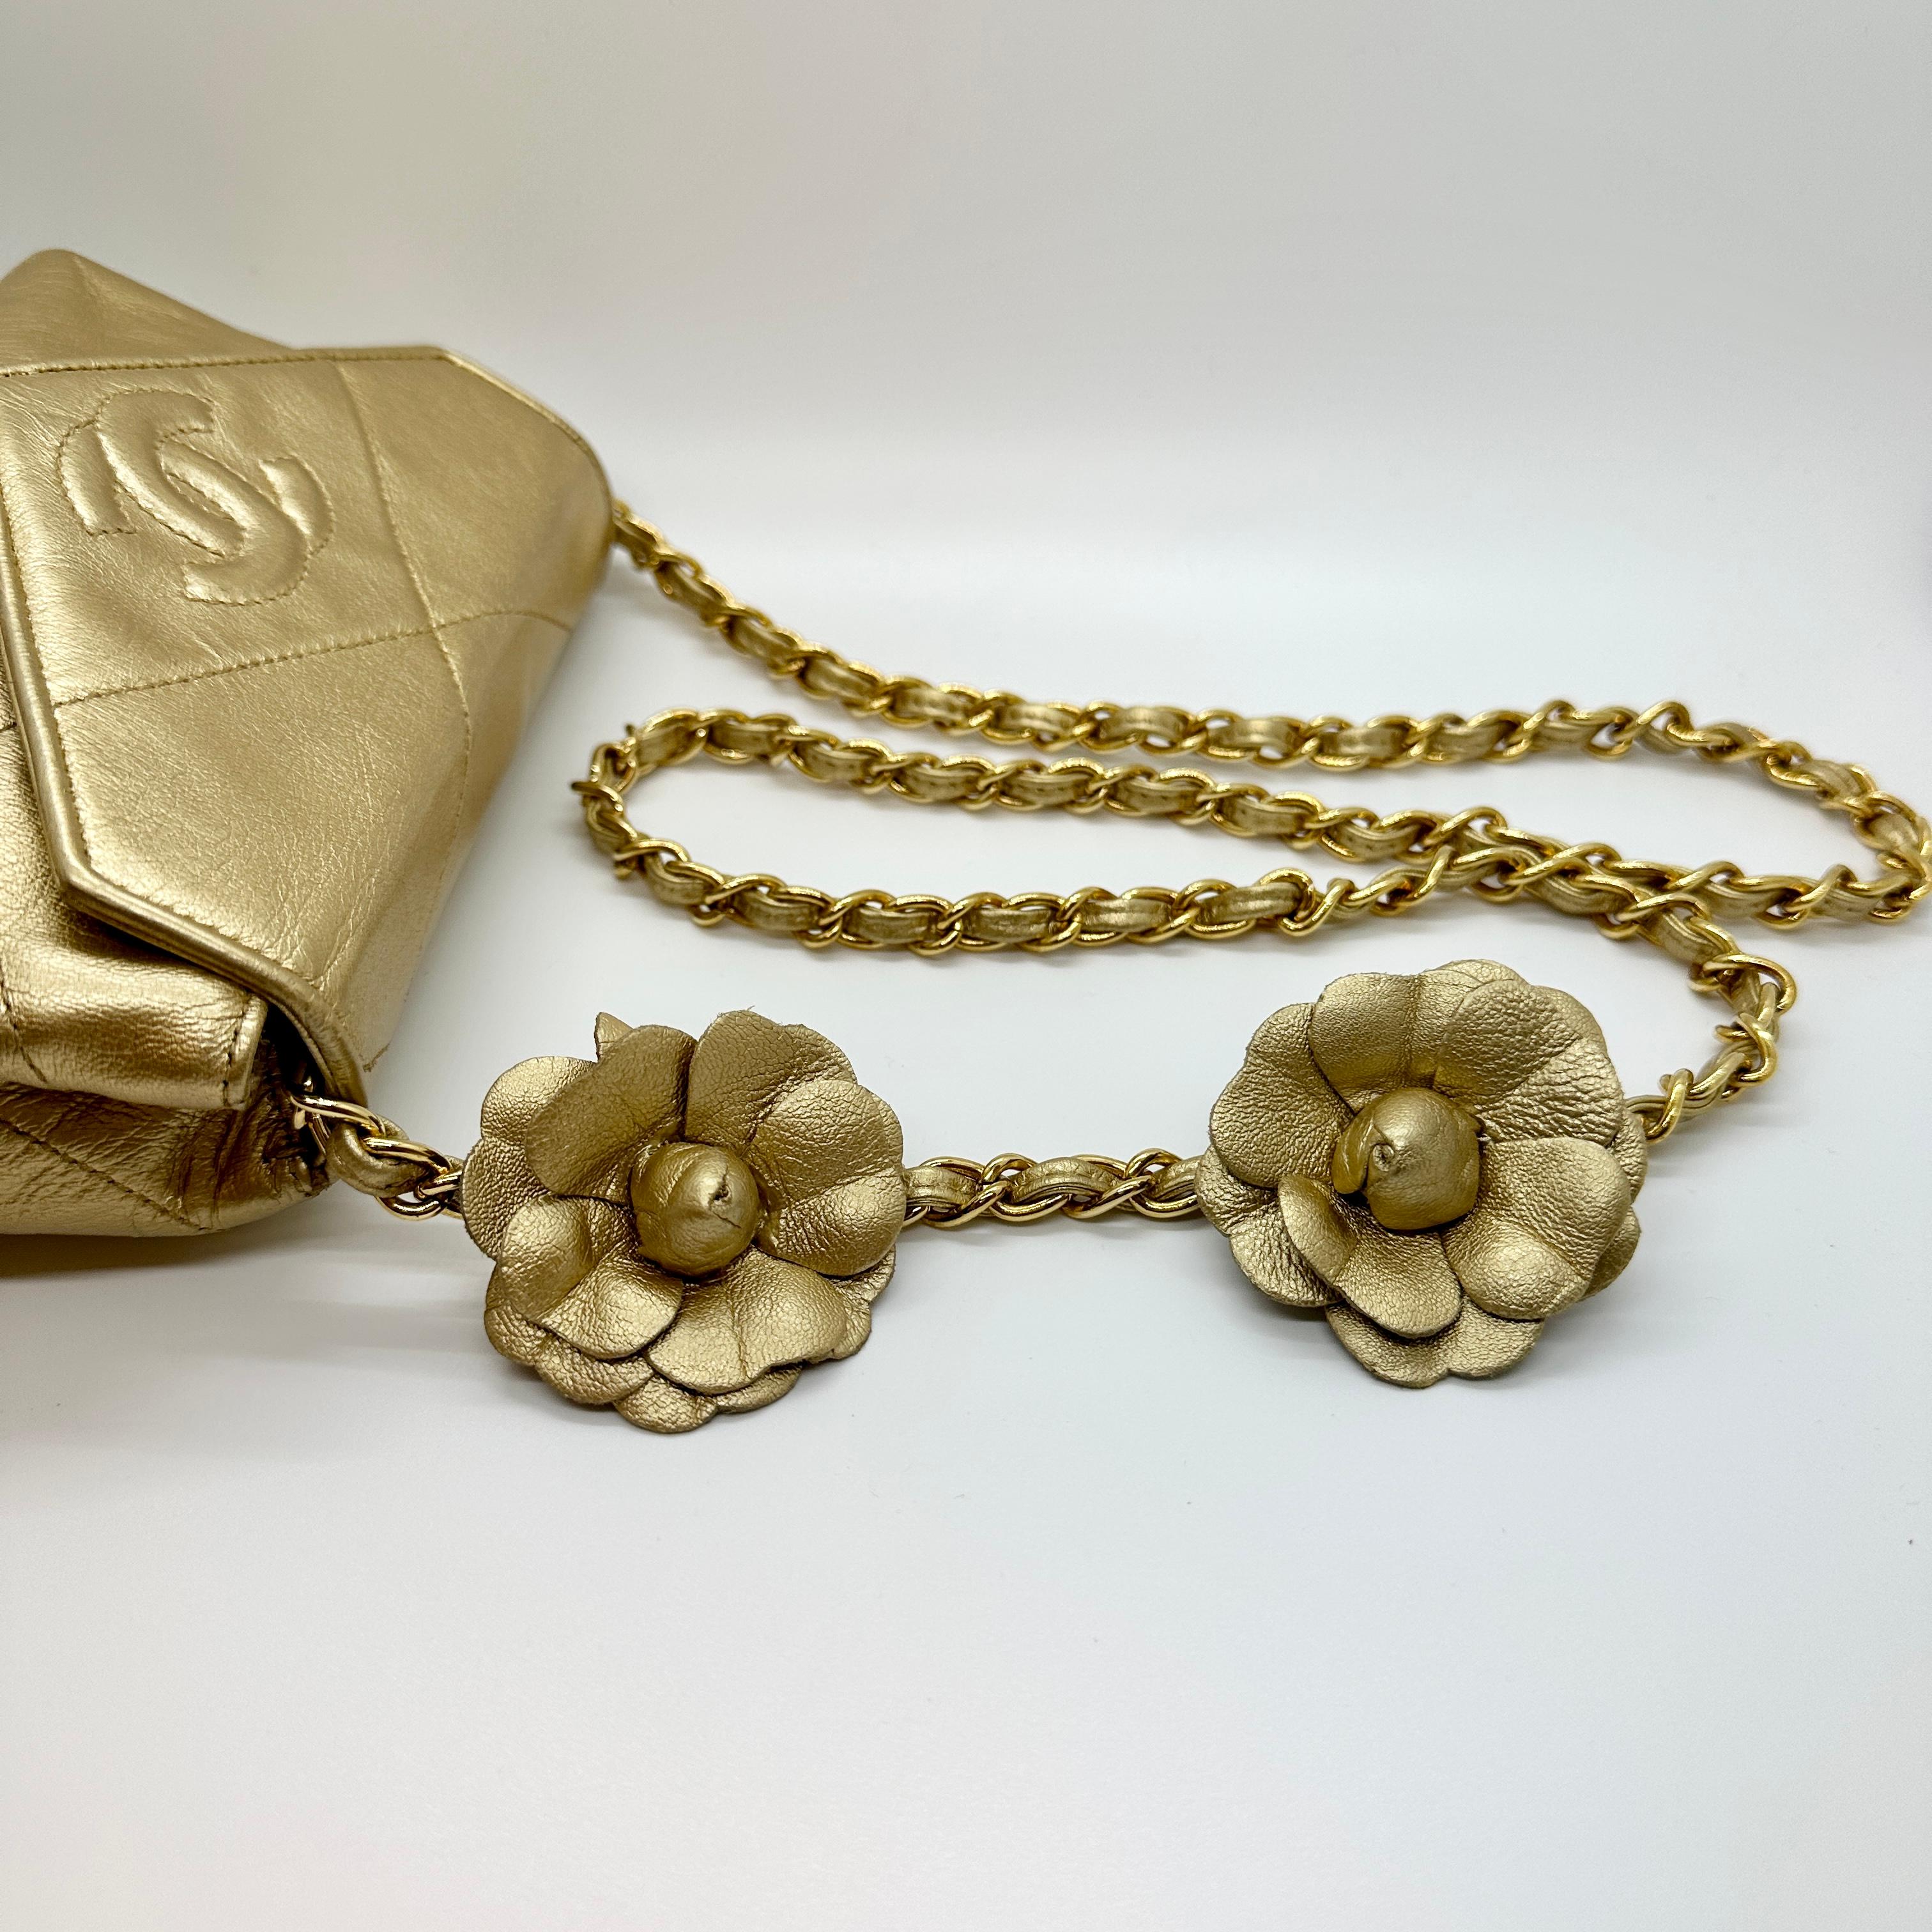 Chanel Metallic Gold Camellia Flower Flap Bag